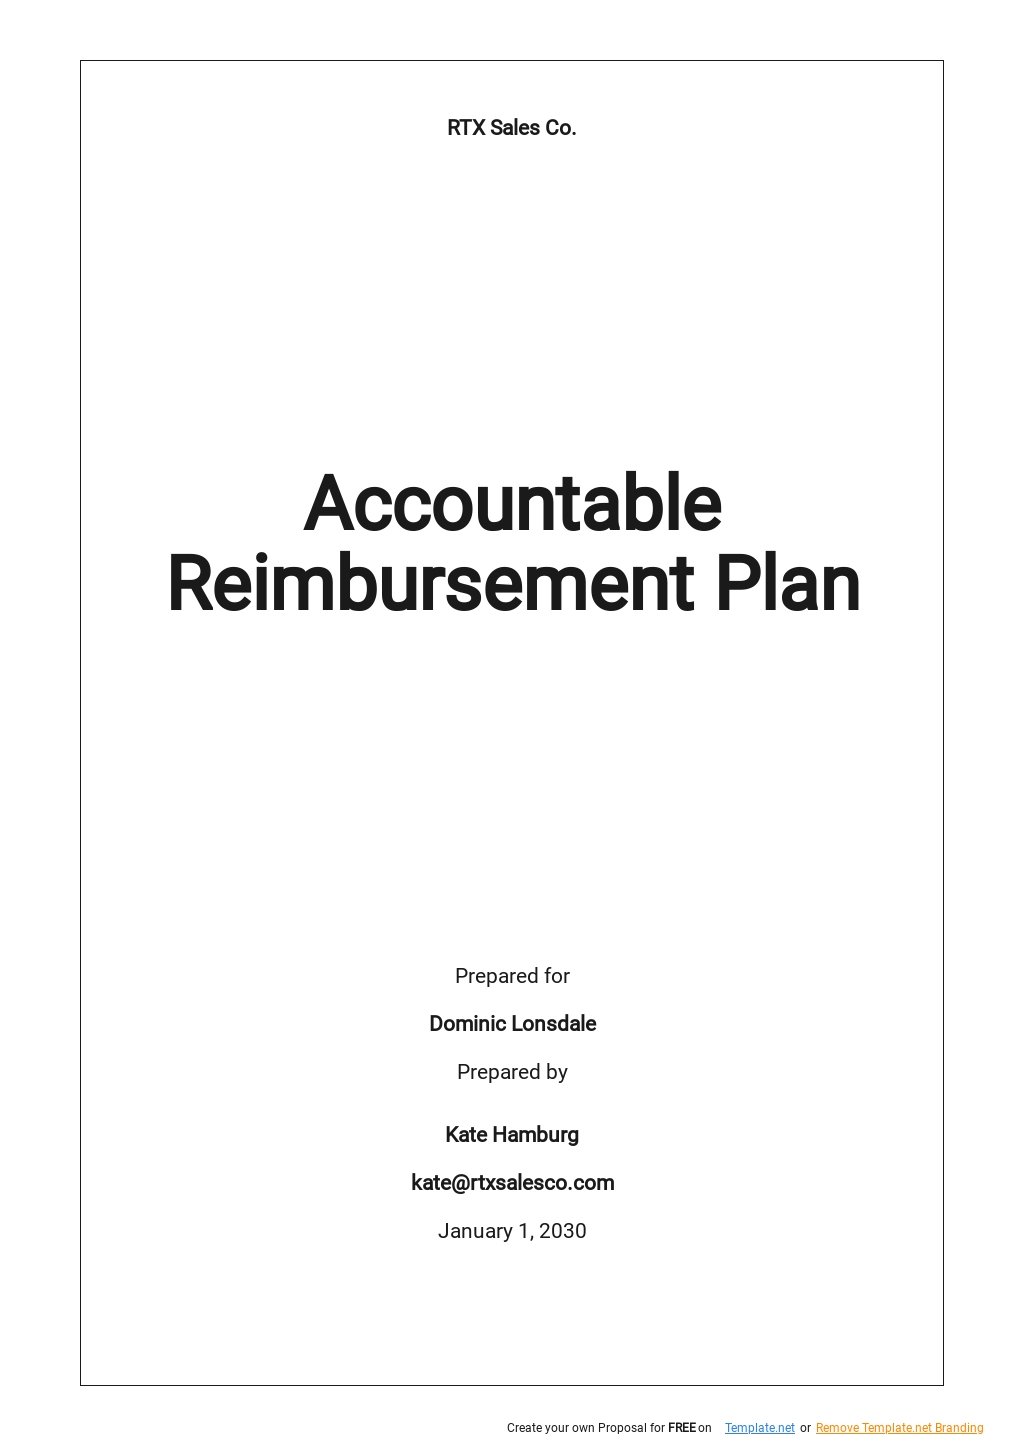 Accountable Reimbursement Plan Template Google Docs, Word, Apple